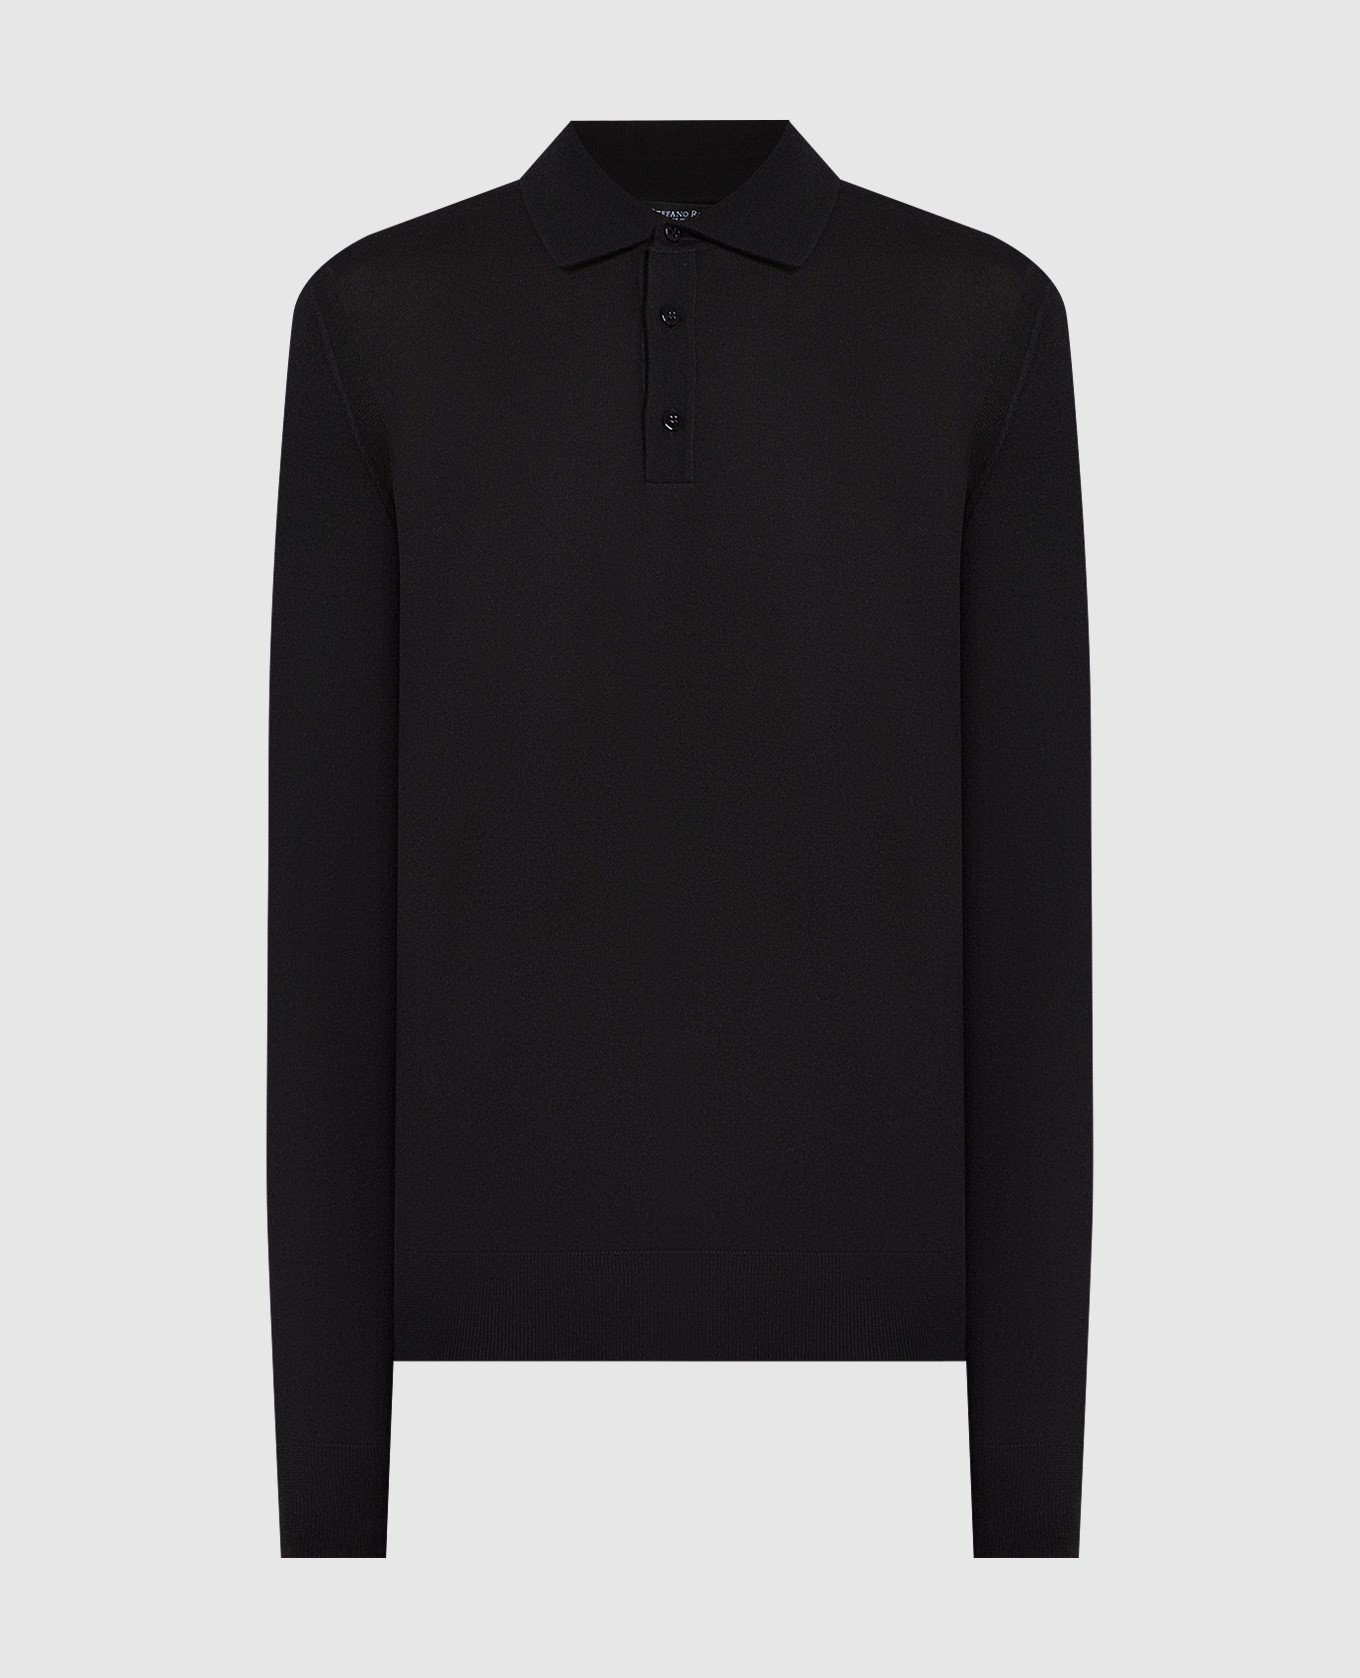 Black cashmere and silk polo shirt